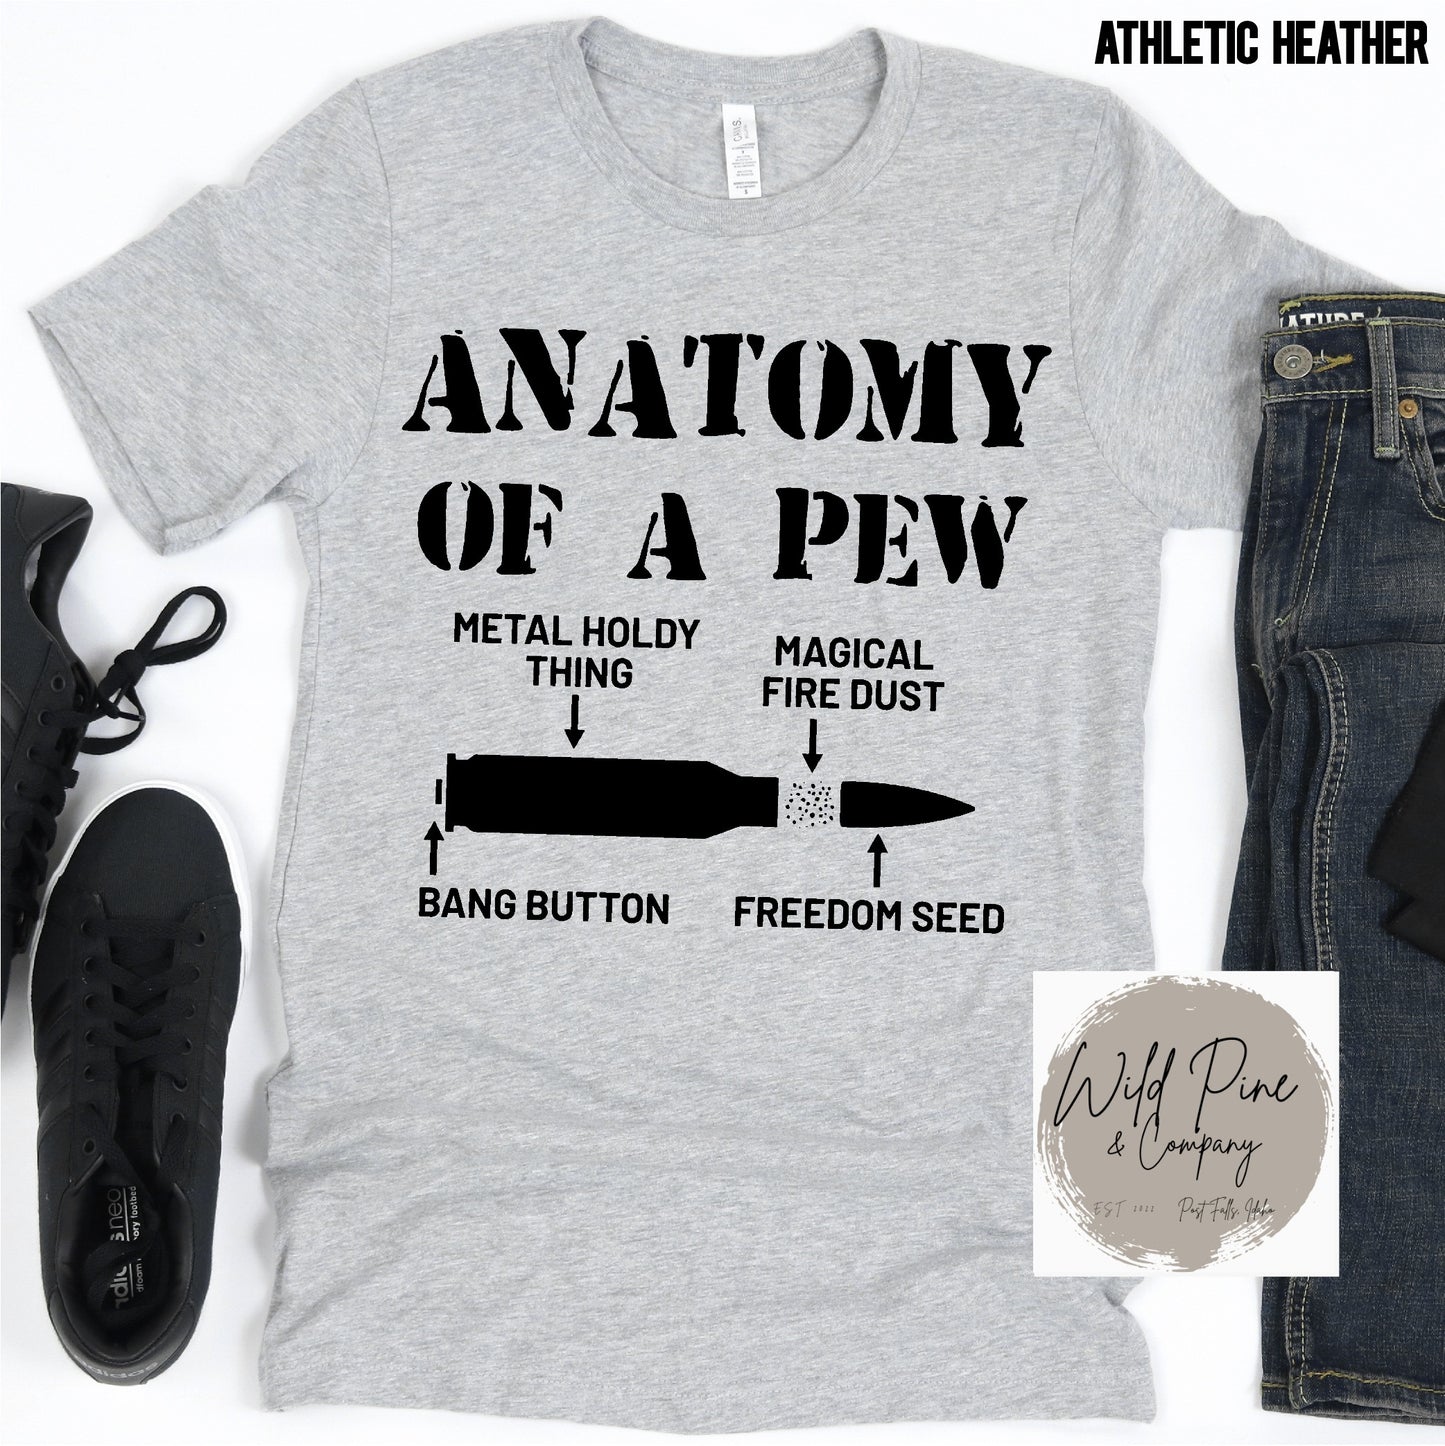 Anatomy of a pew (black)